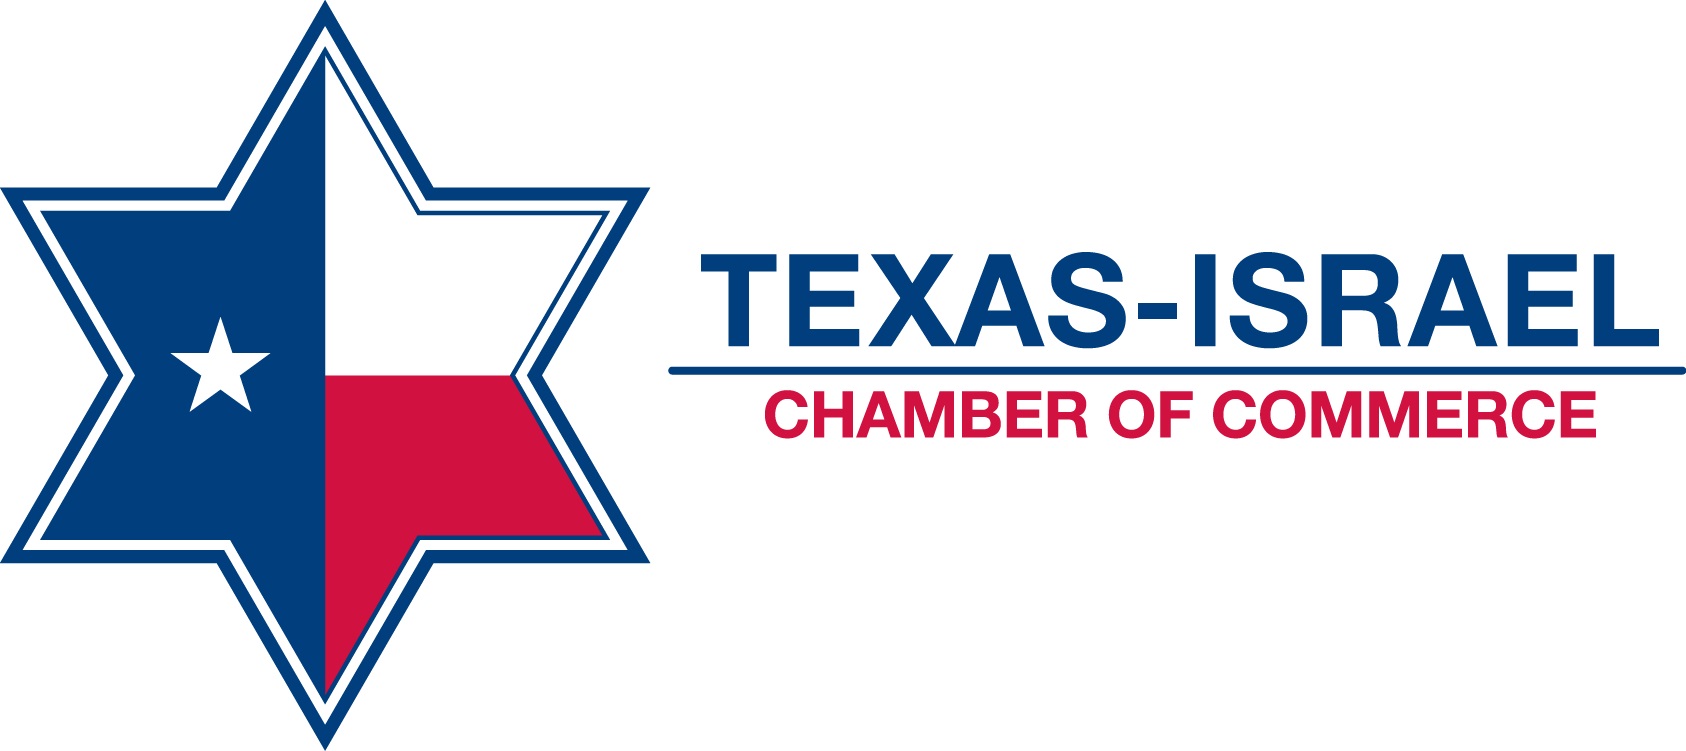 Texas-Israel Chamber of Commerce